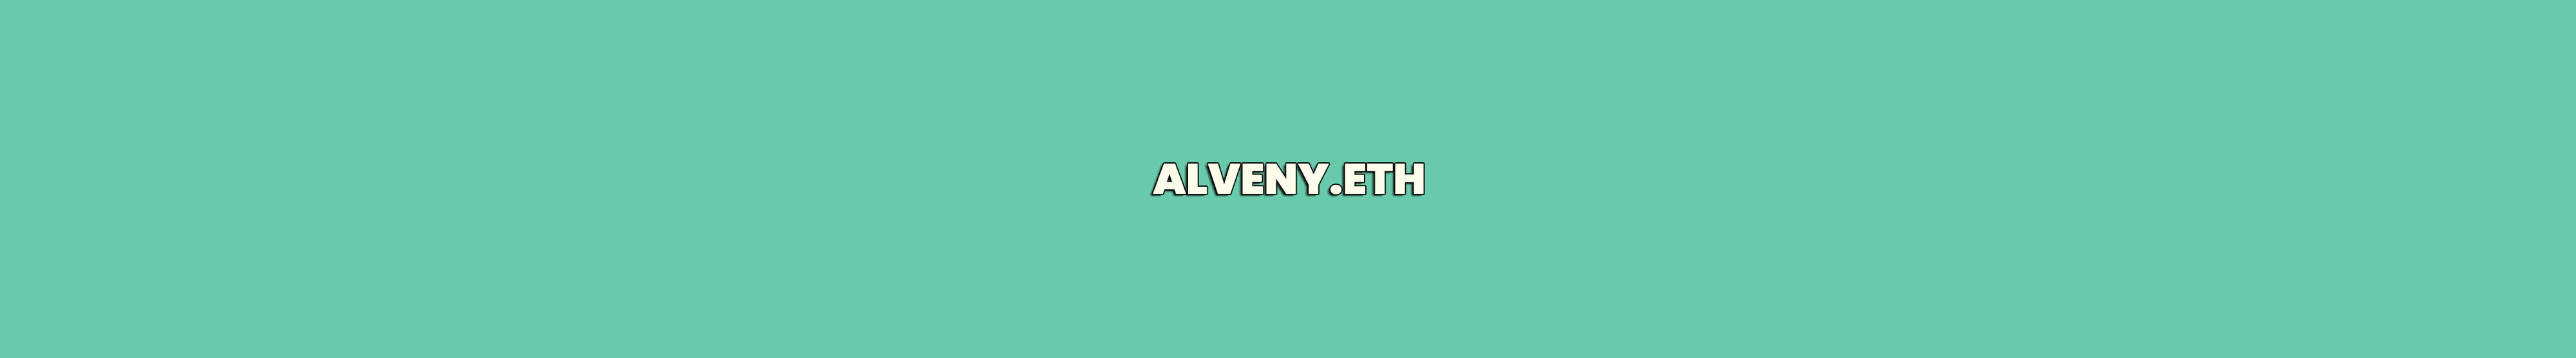 Alveny banner